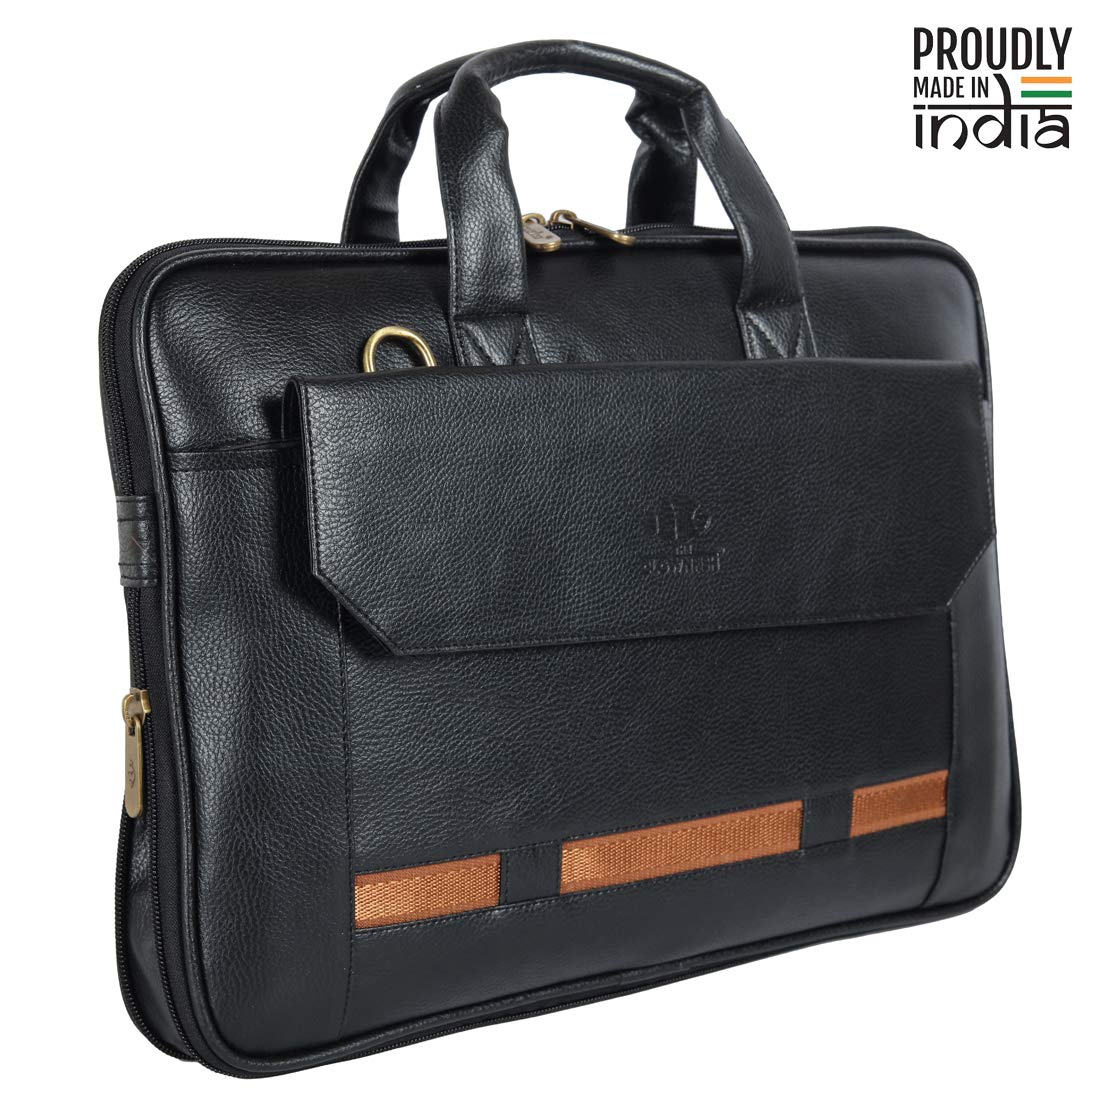 The Clownfish Faux Leather Expandable Laptop Tablet Messenger Bag Briefcase Black 15.6 inch